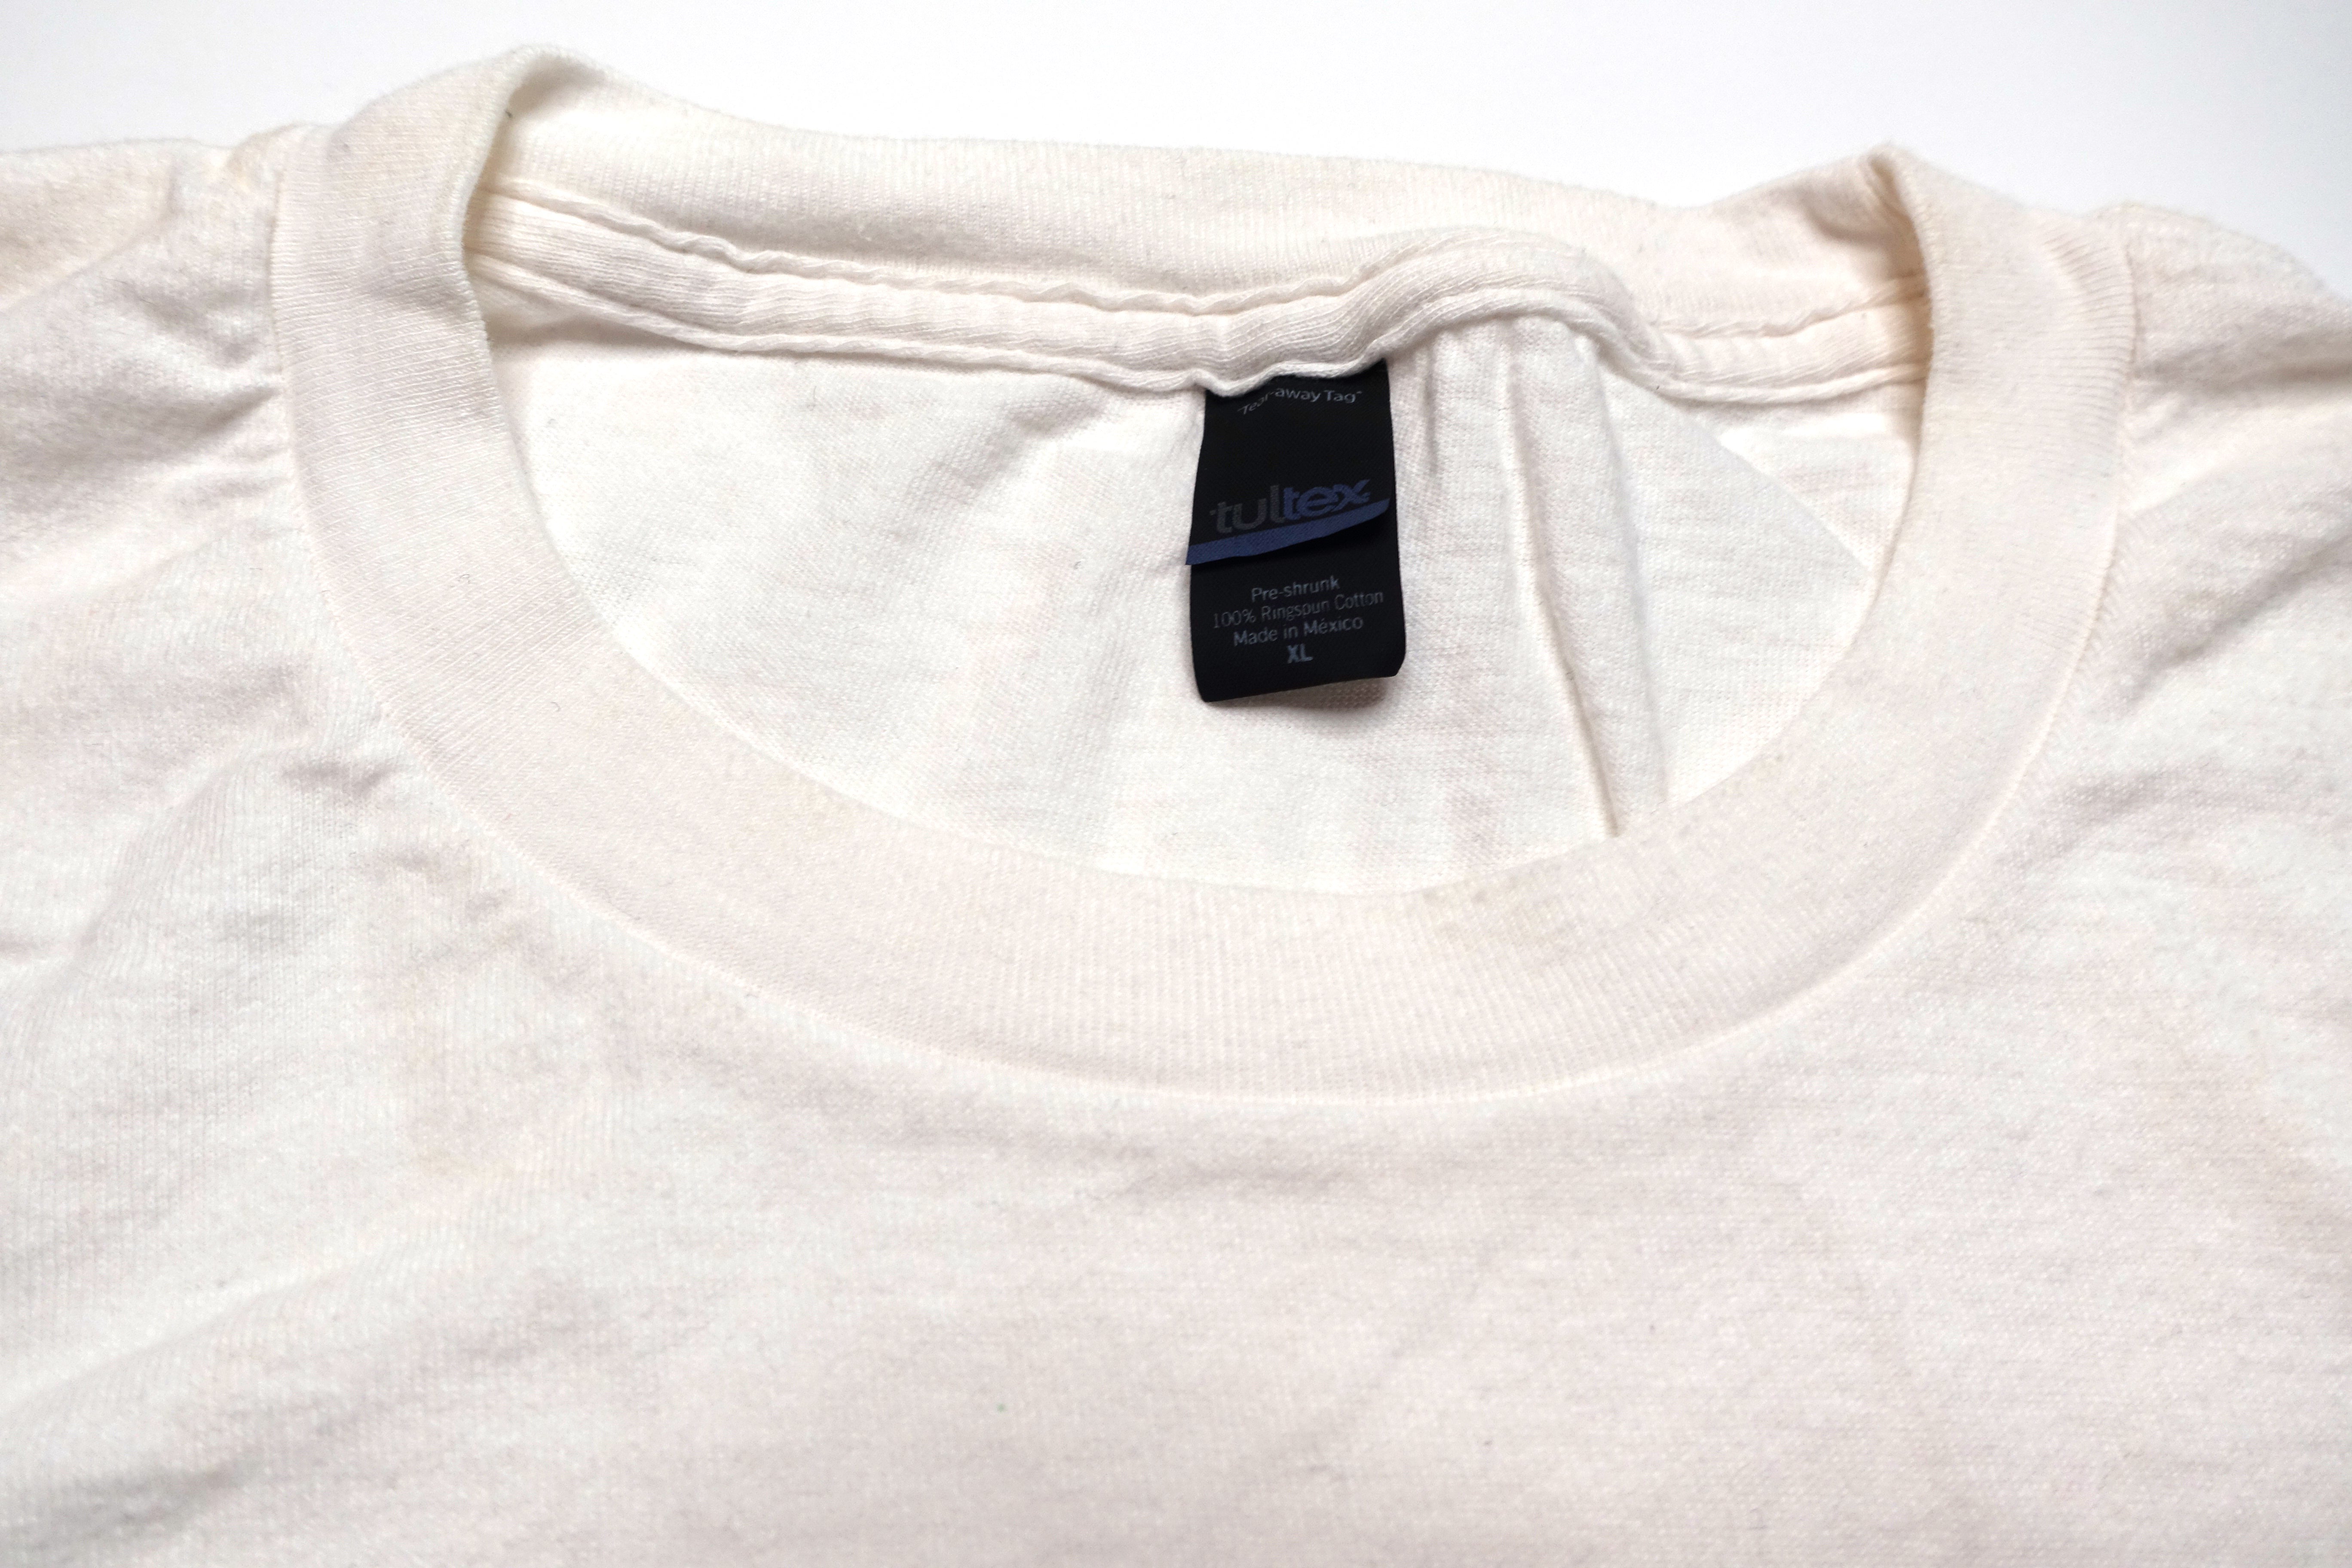 Speedy Ortiz - Souvenir Casual Garment 2015? Tour Shirt Size Large